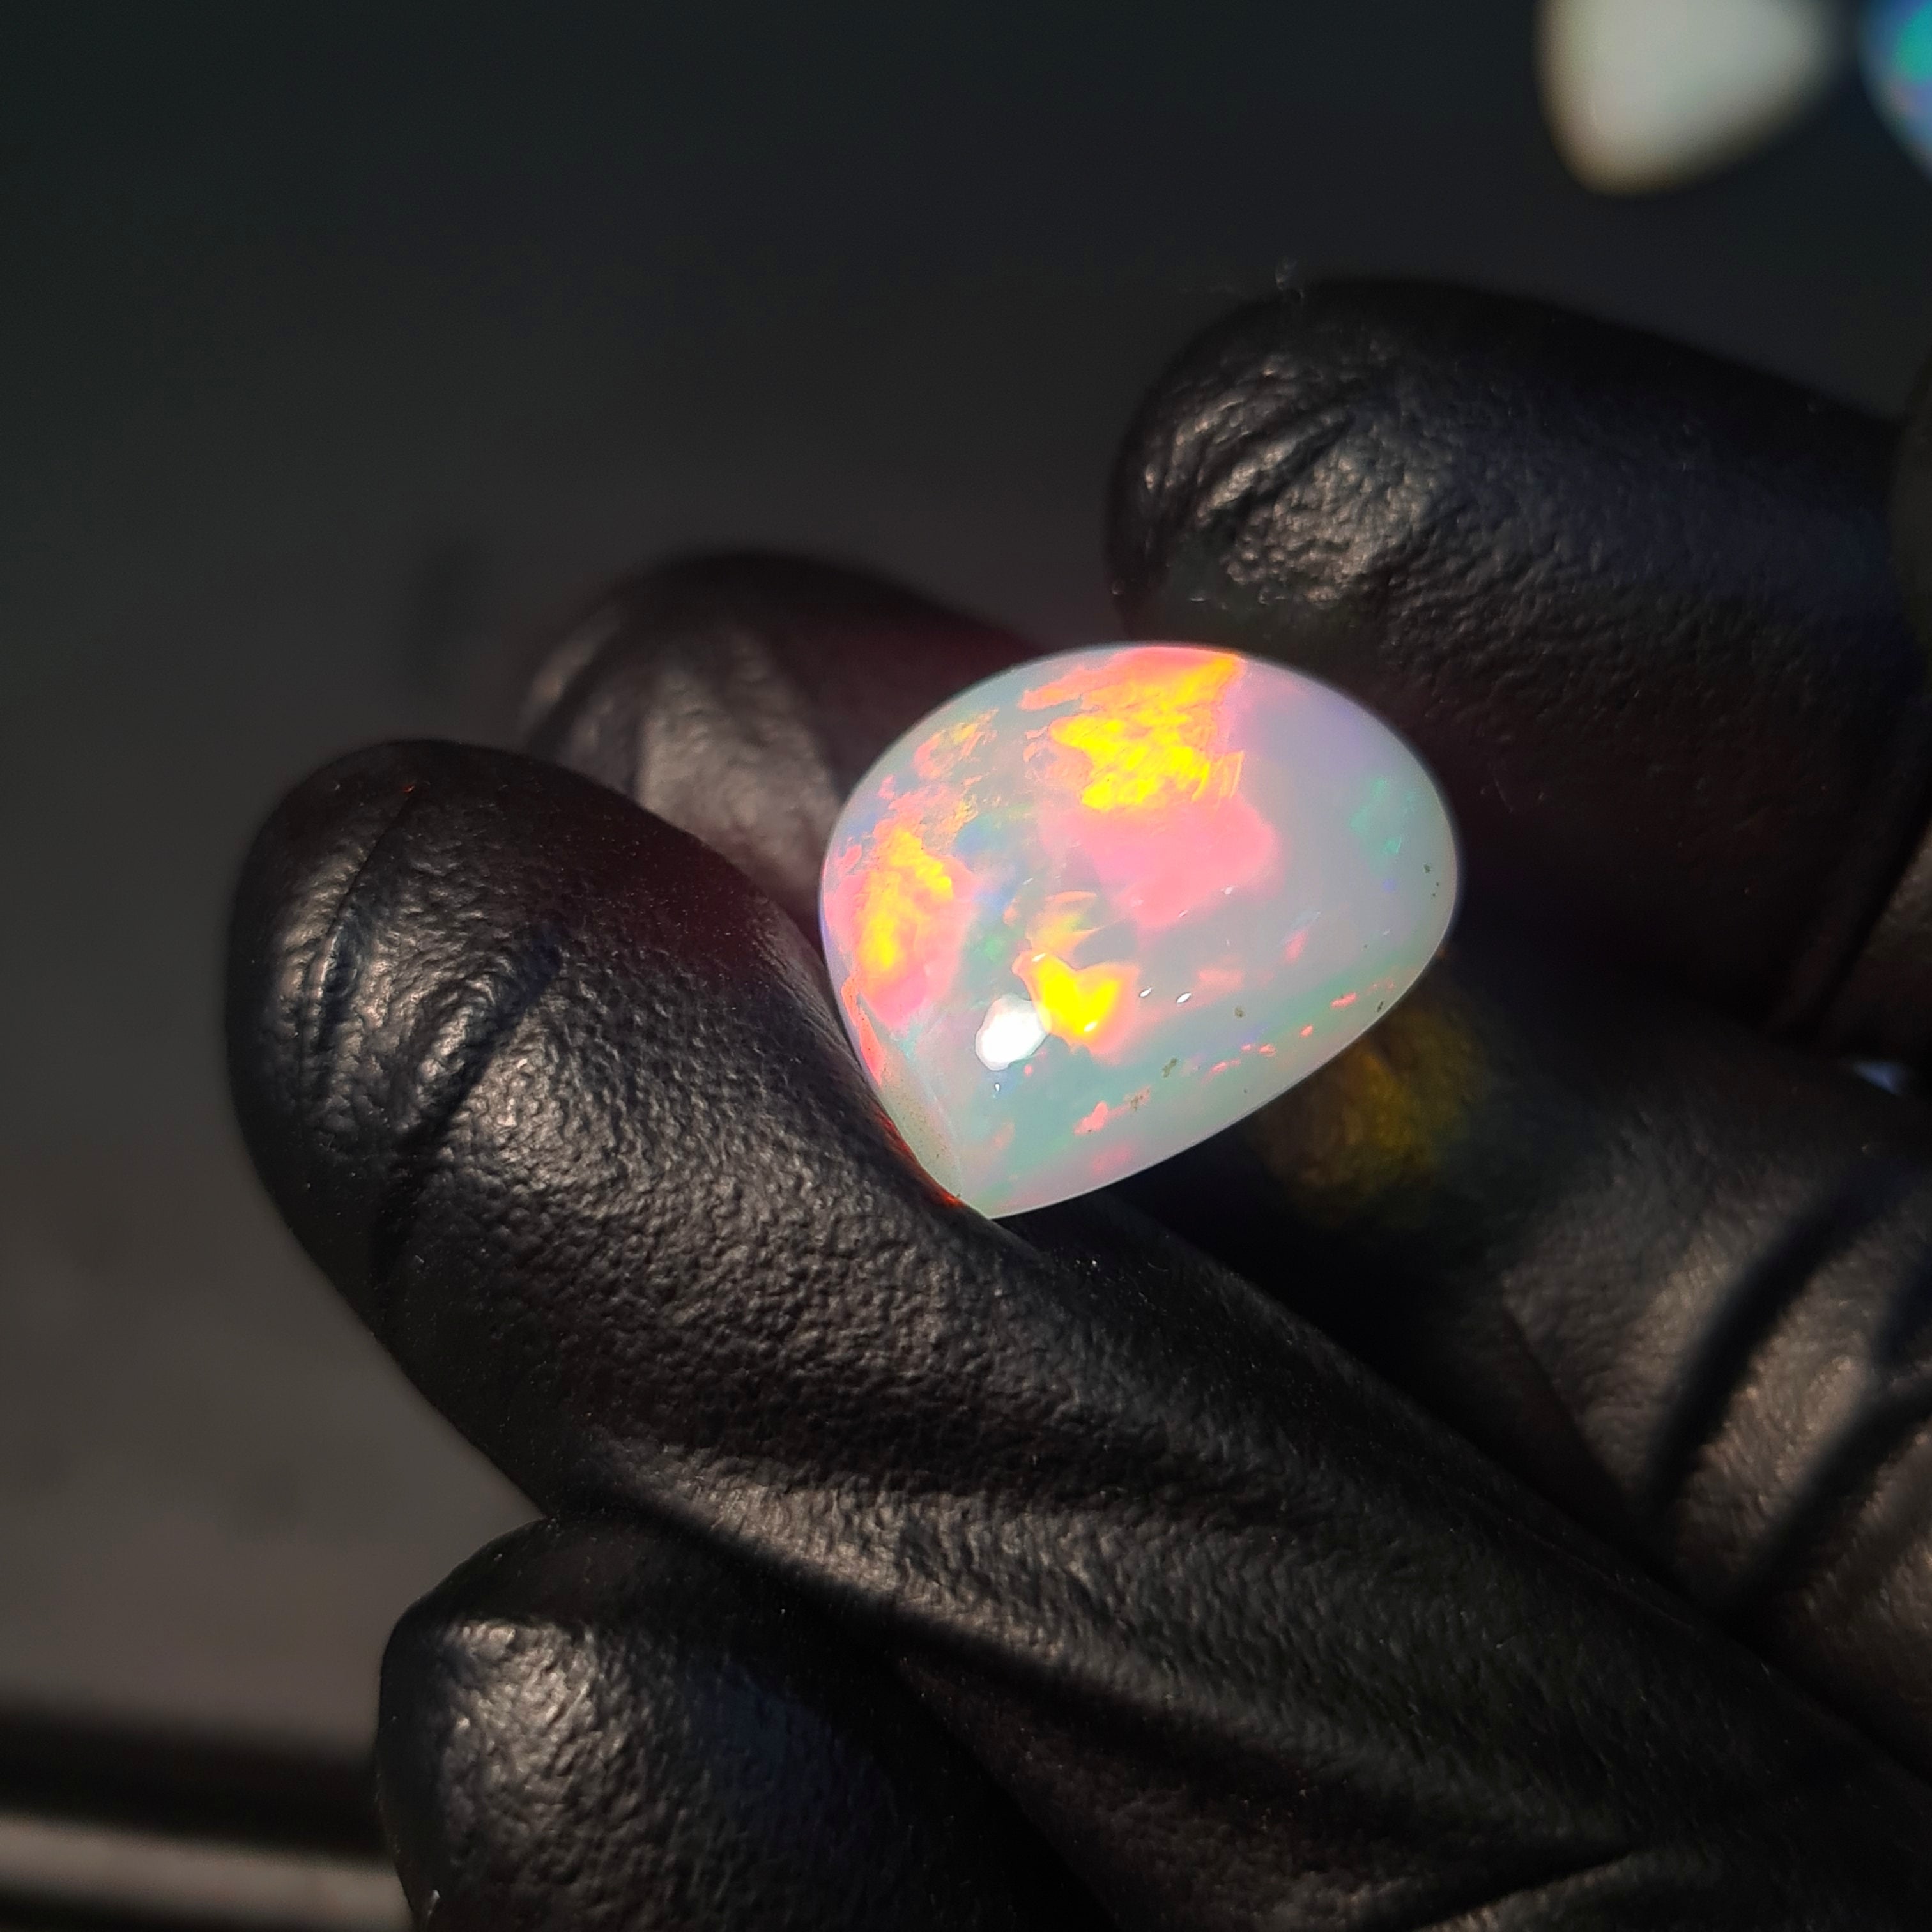 1 Pcs Of Natural Ethopian Opal Teardrop Shape  |WT: 8.5 Cts|Size:18x16mm - The LabradoriteKing